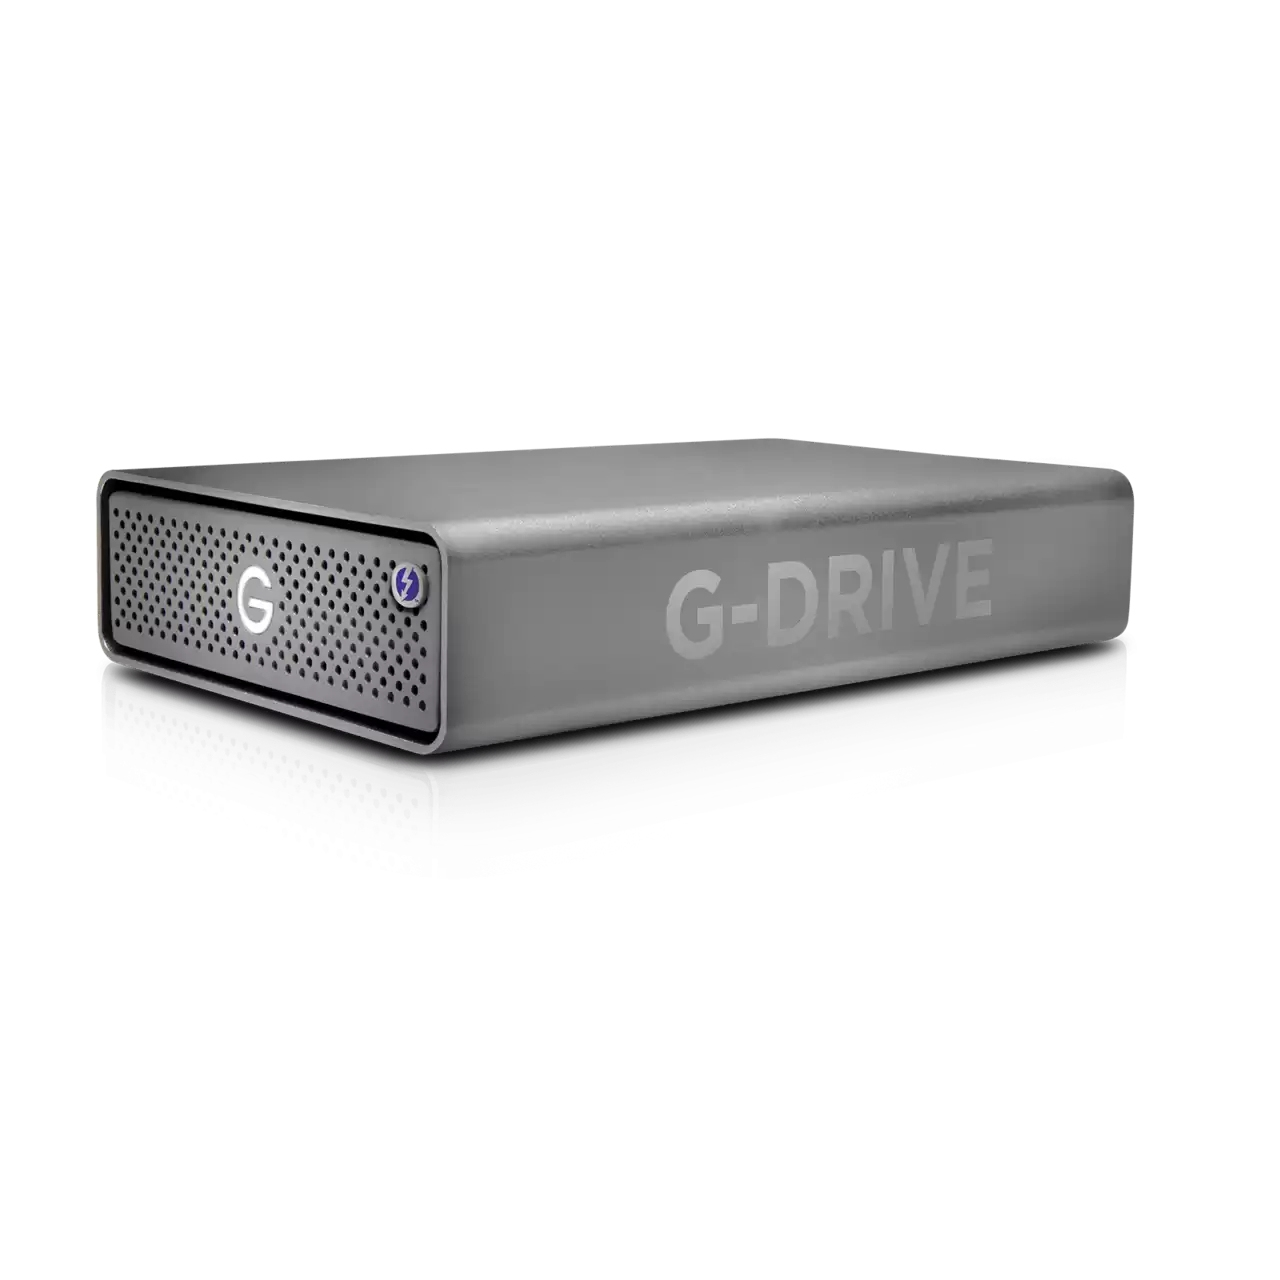  Professional G-DRIVE PRO 12TB 3.5inch Thunderbolt 3 7200RPM USB-C 5Gbps Enterprise-Class Desktop Drive - Space Grey